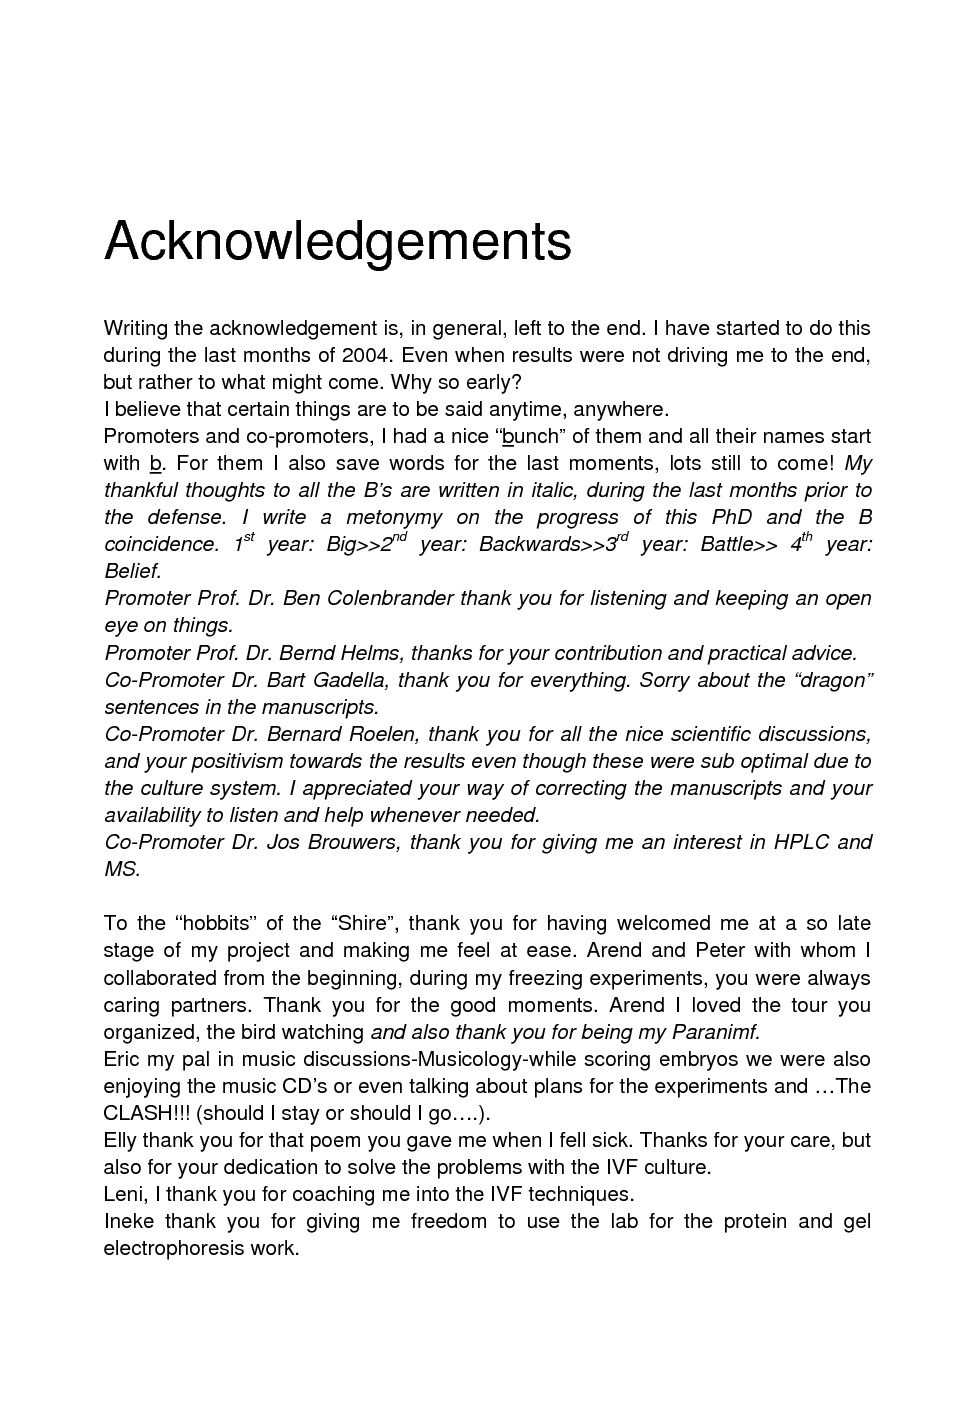 Acknowledgment in dissertation